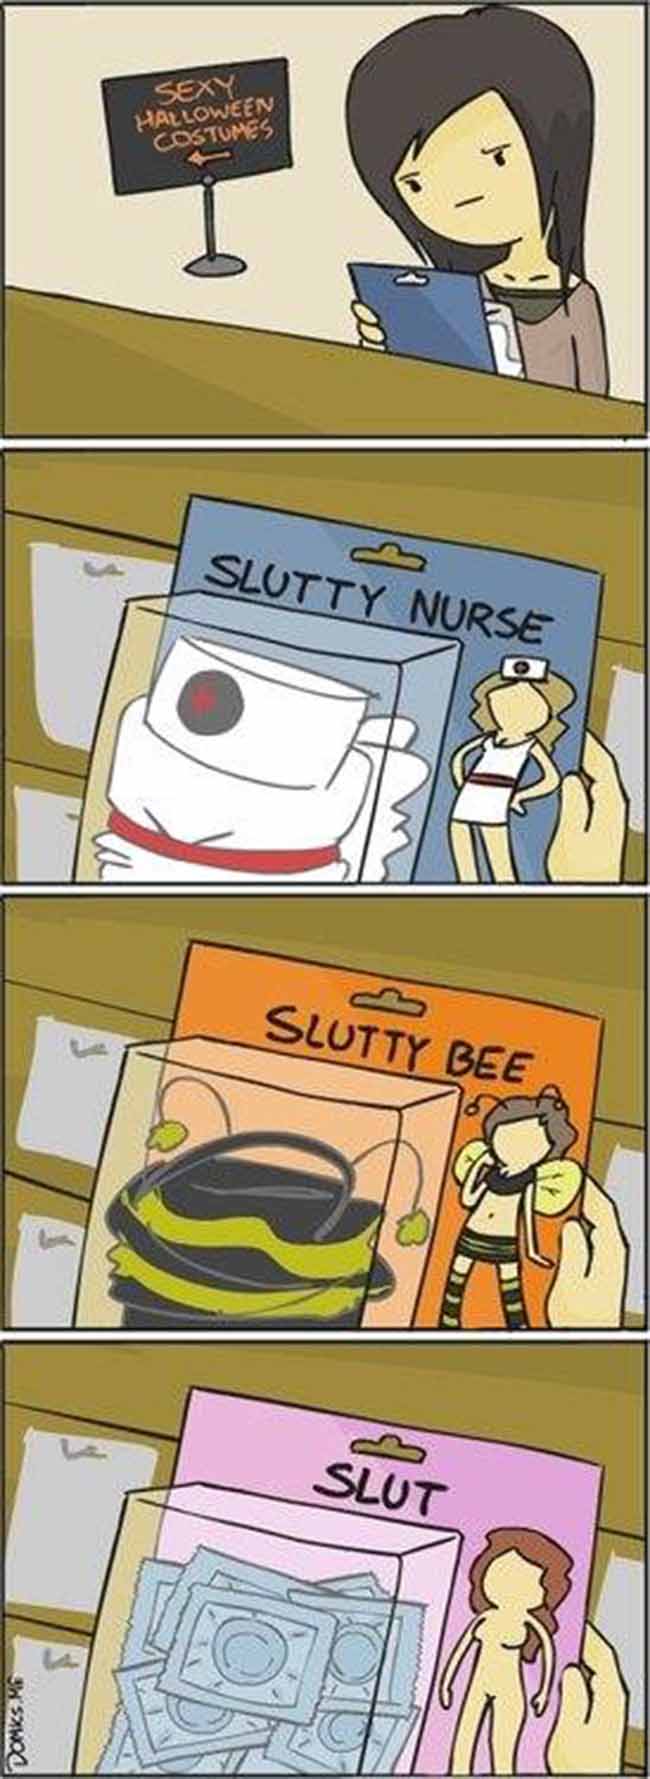 memes - halloween slut costume meme - Sex Halloween Costumes Slutty Nurse 25 Slutty Bee Domks Ms